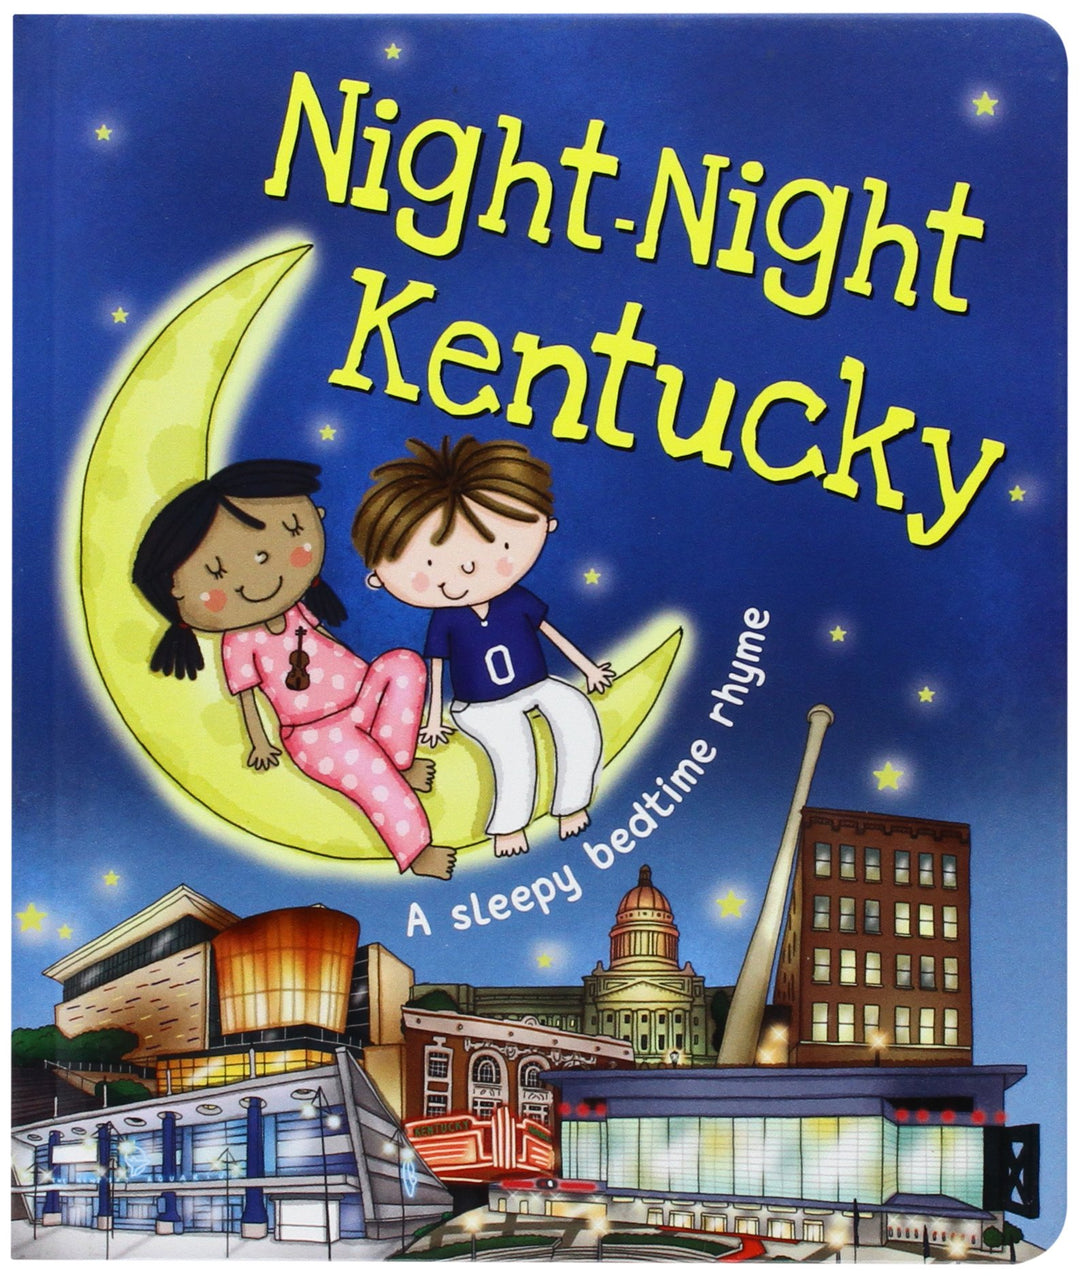 Night-Night Kentucky